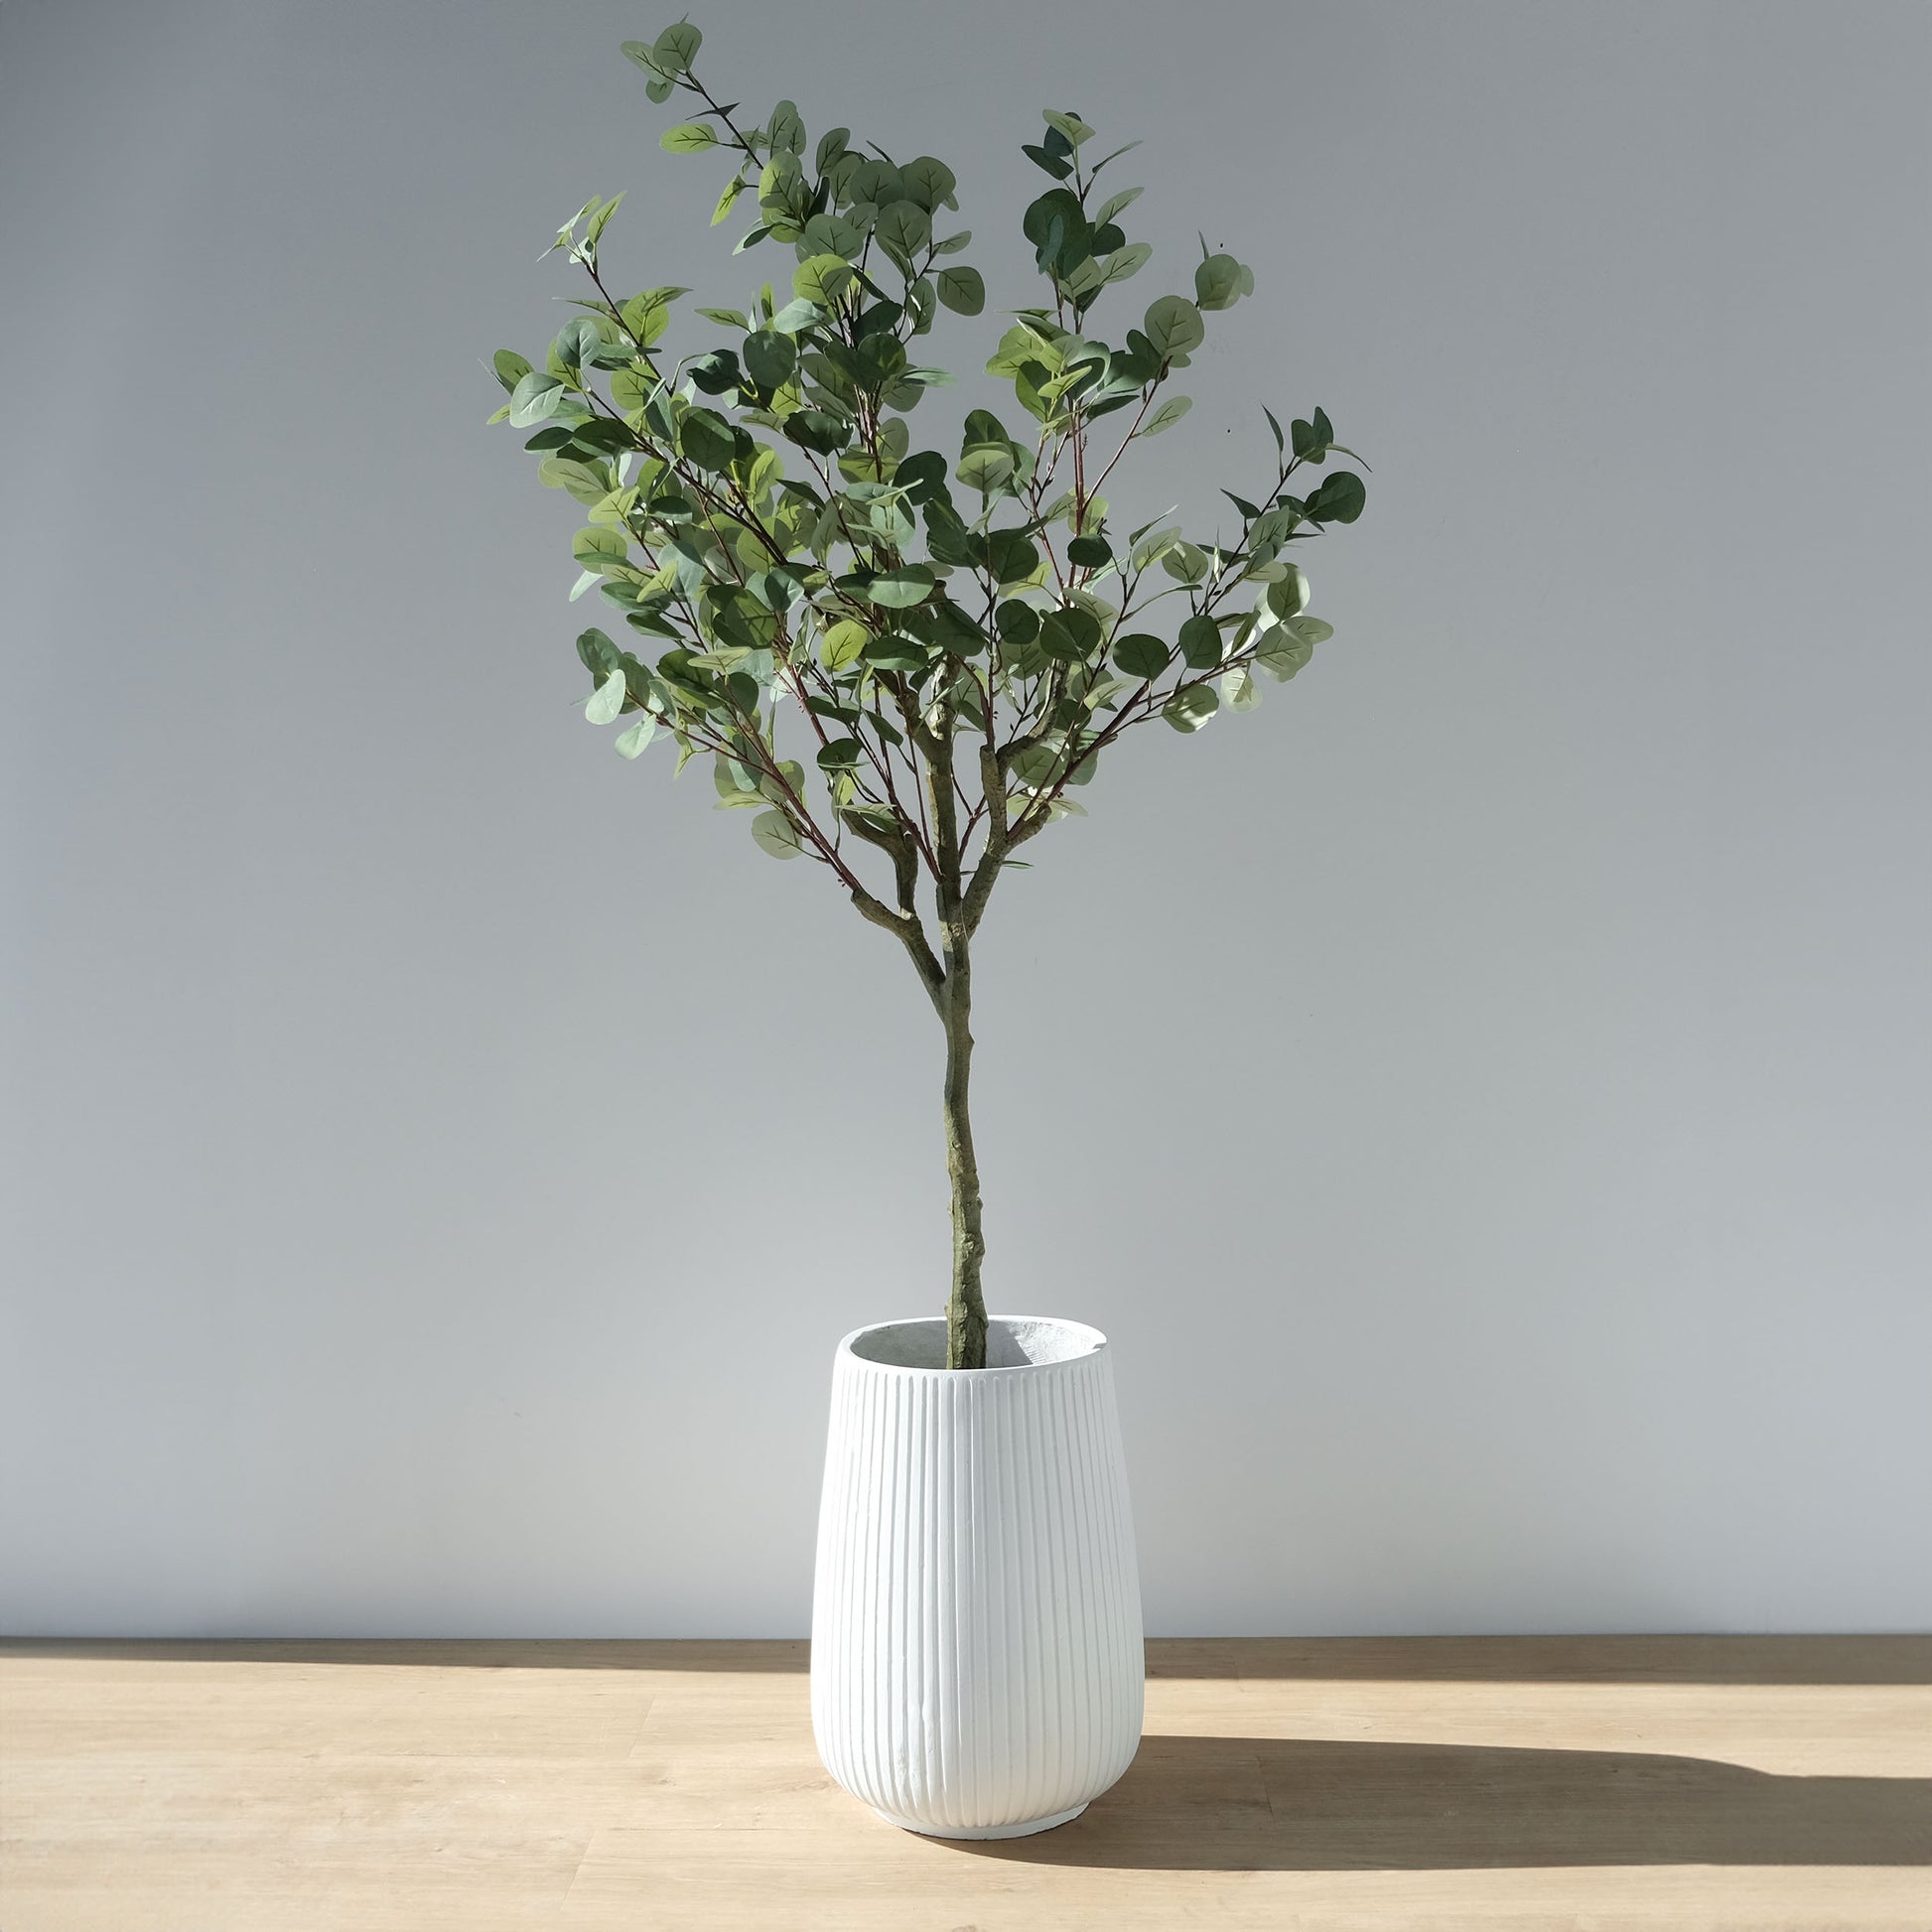 a eucalyptus plant in a white fiberclay planter